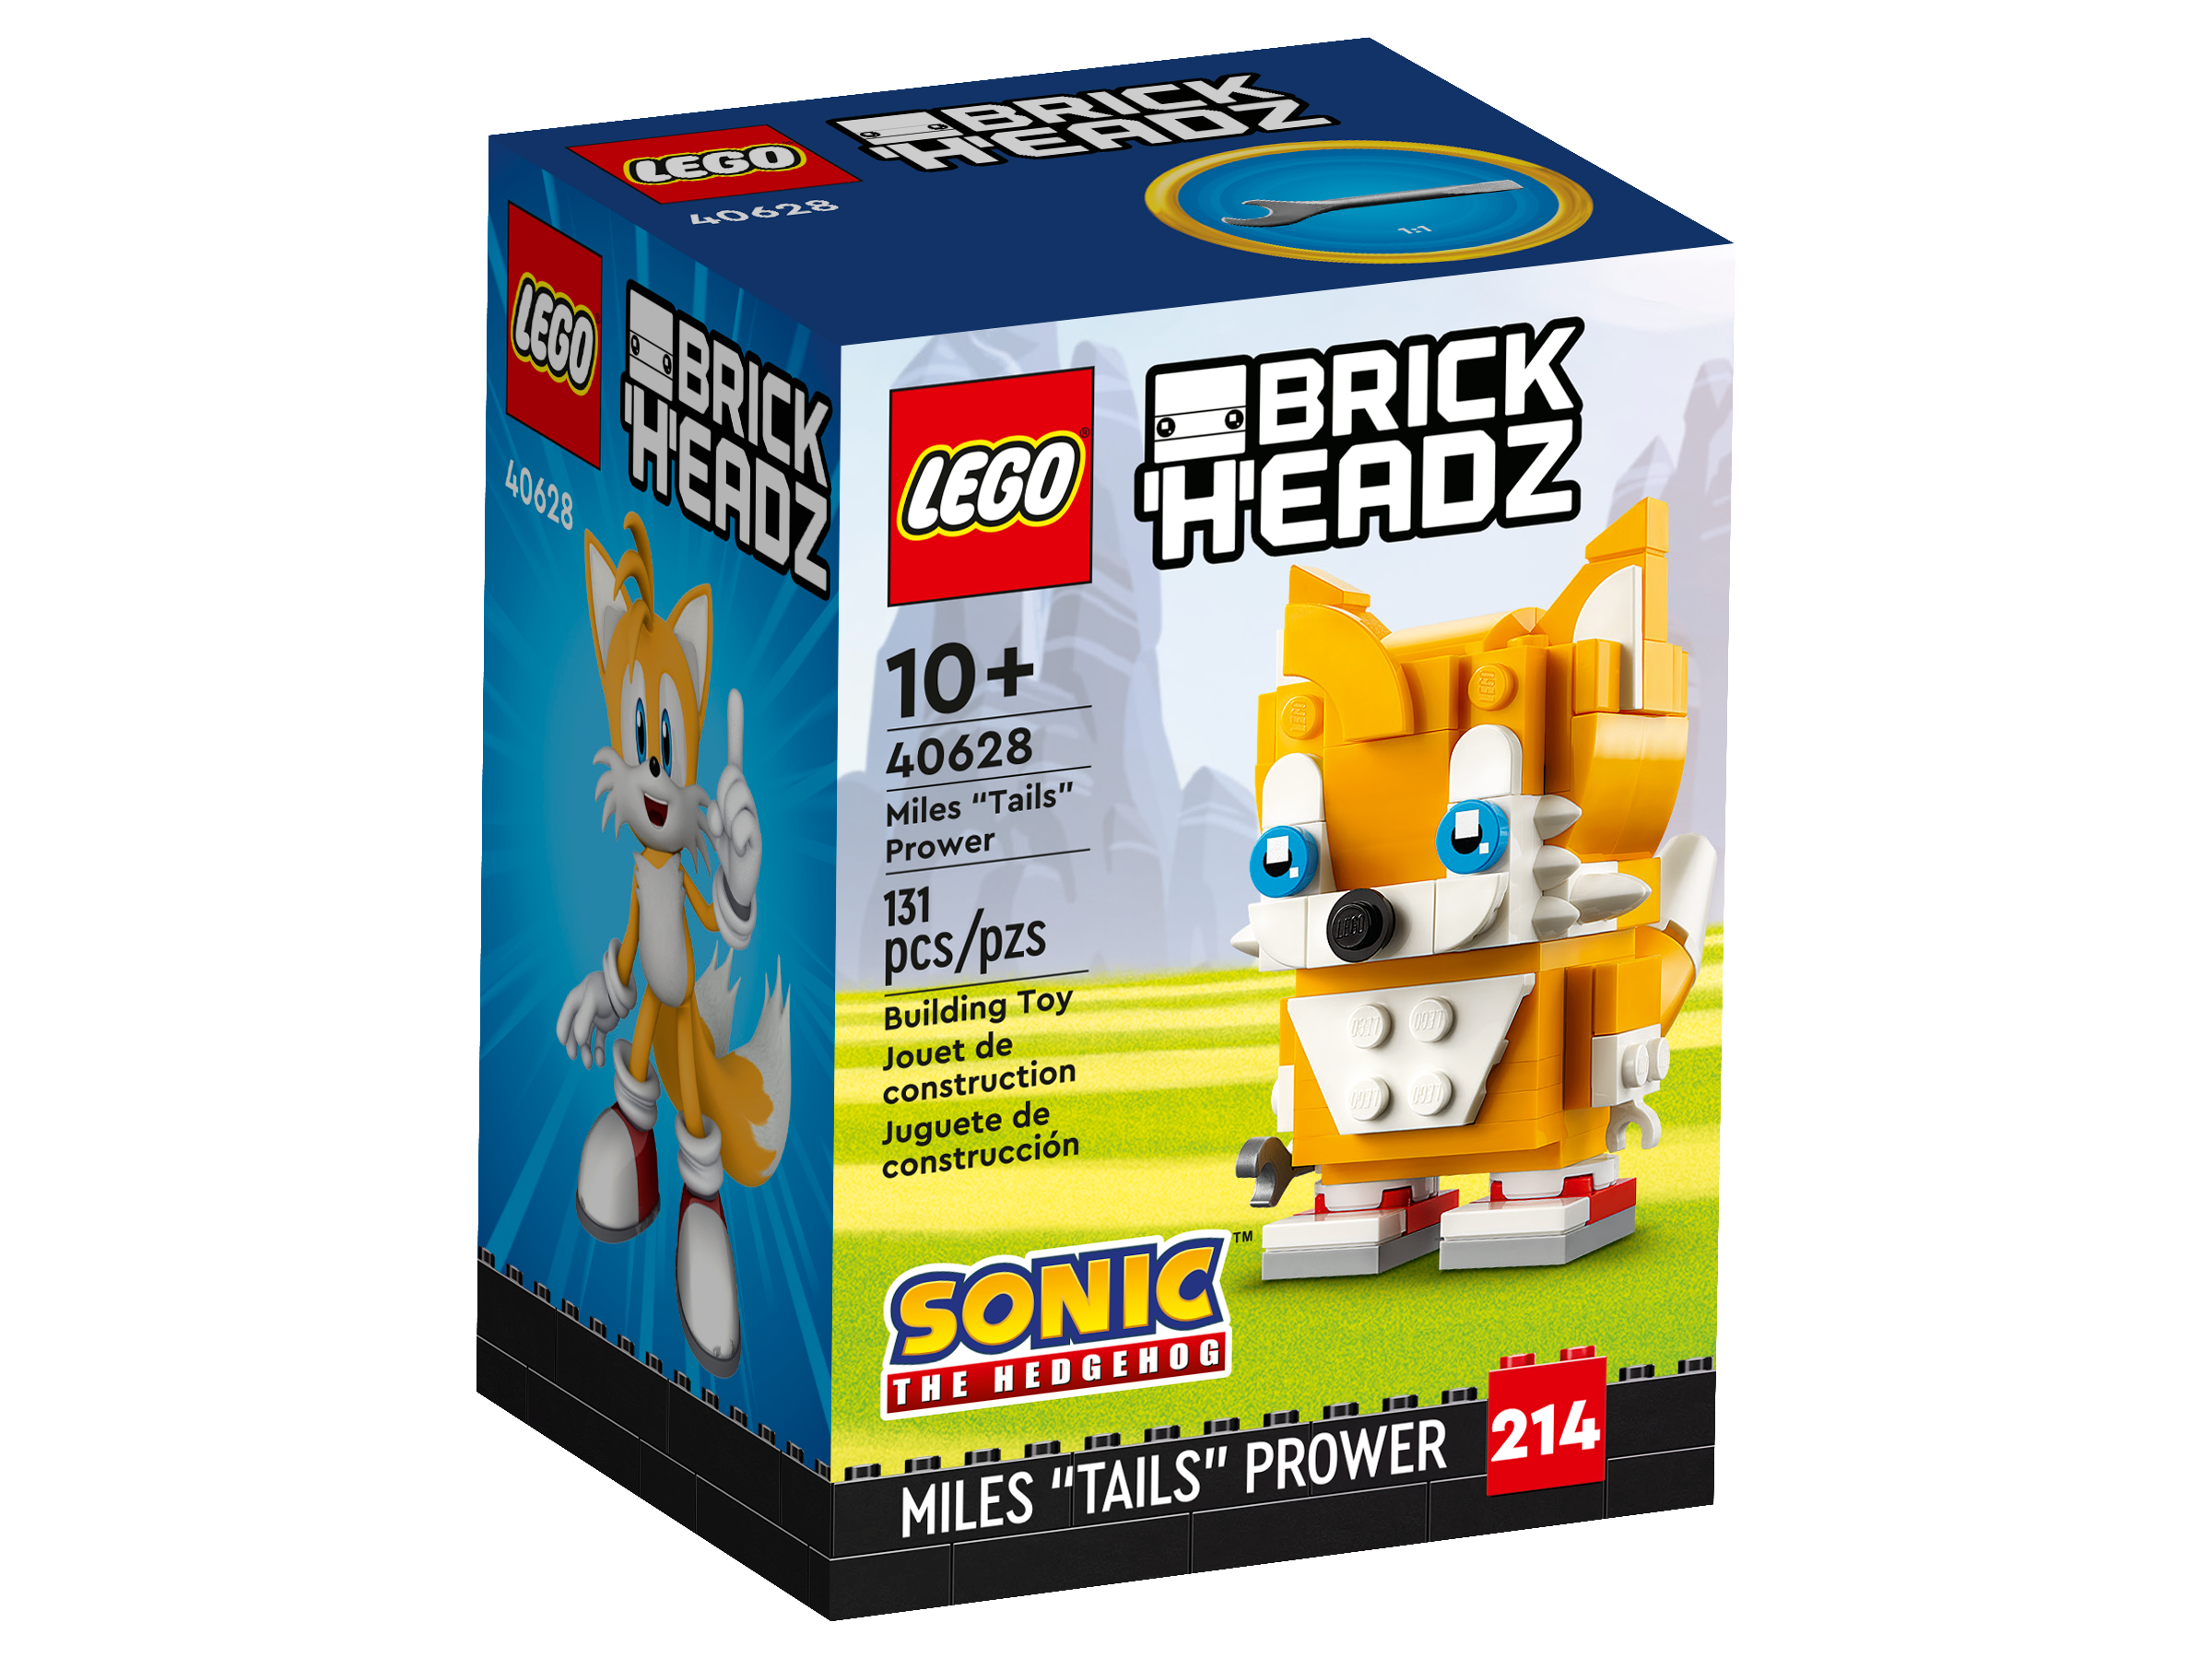 Sonic The Hedgehog 2 en LEGO! 🤩🌀 #Sonic2 